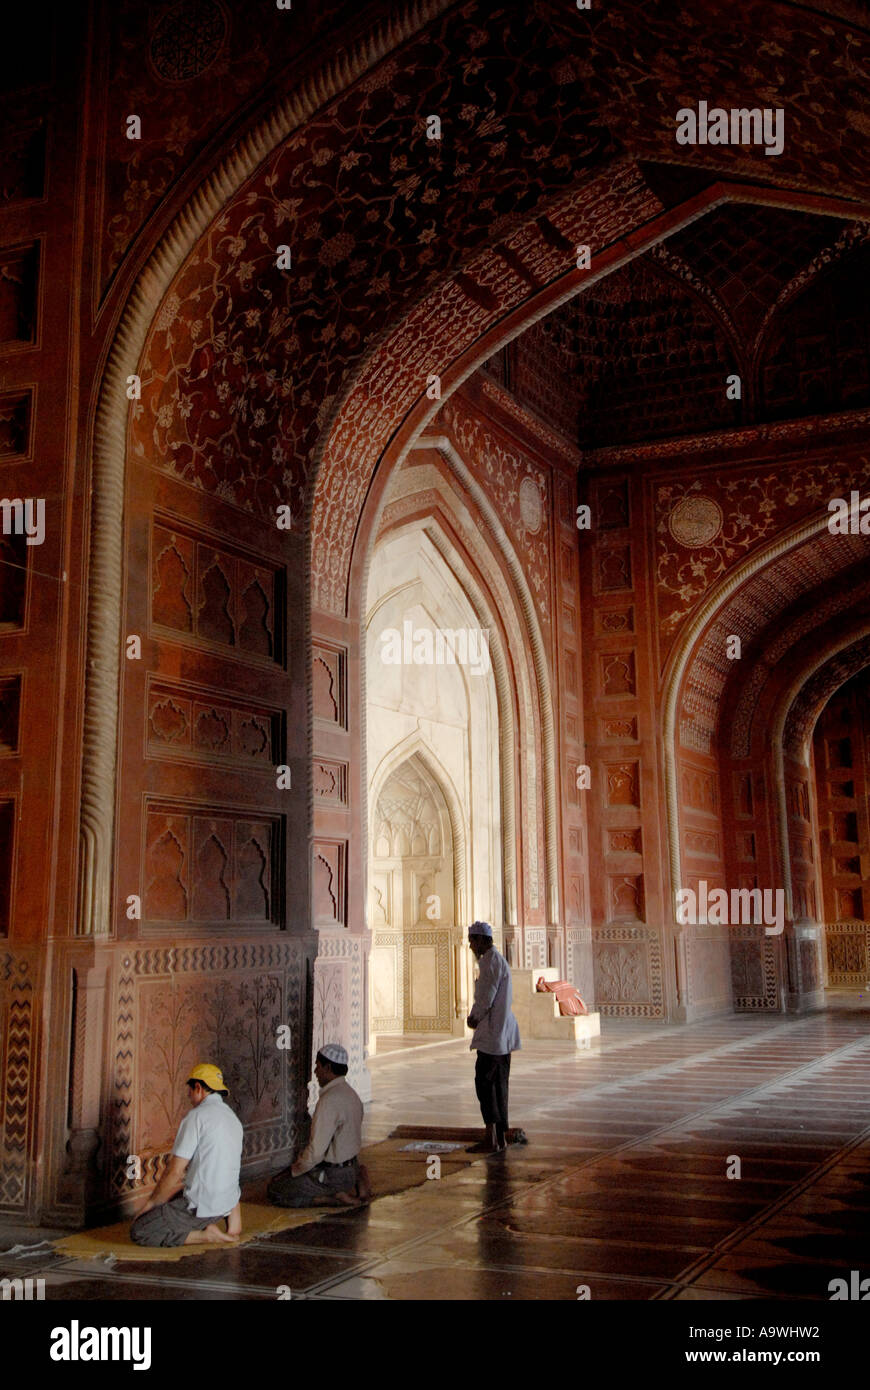 Inside the Mosque Taj Mahal Agra Uttar Pradesh India Stock Photo